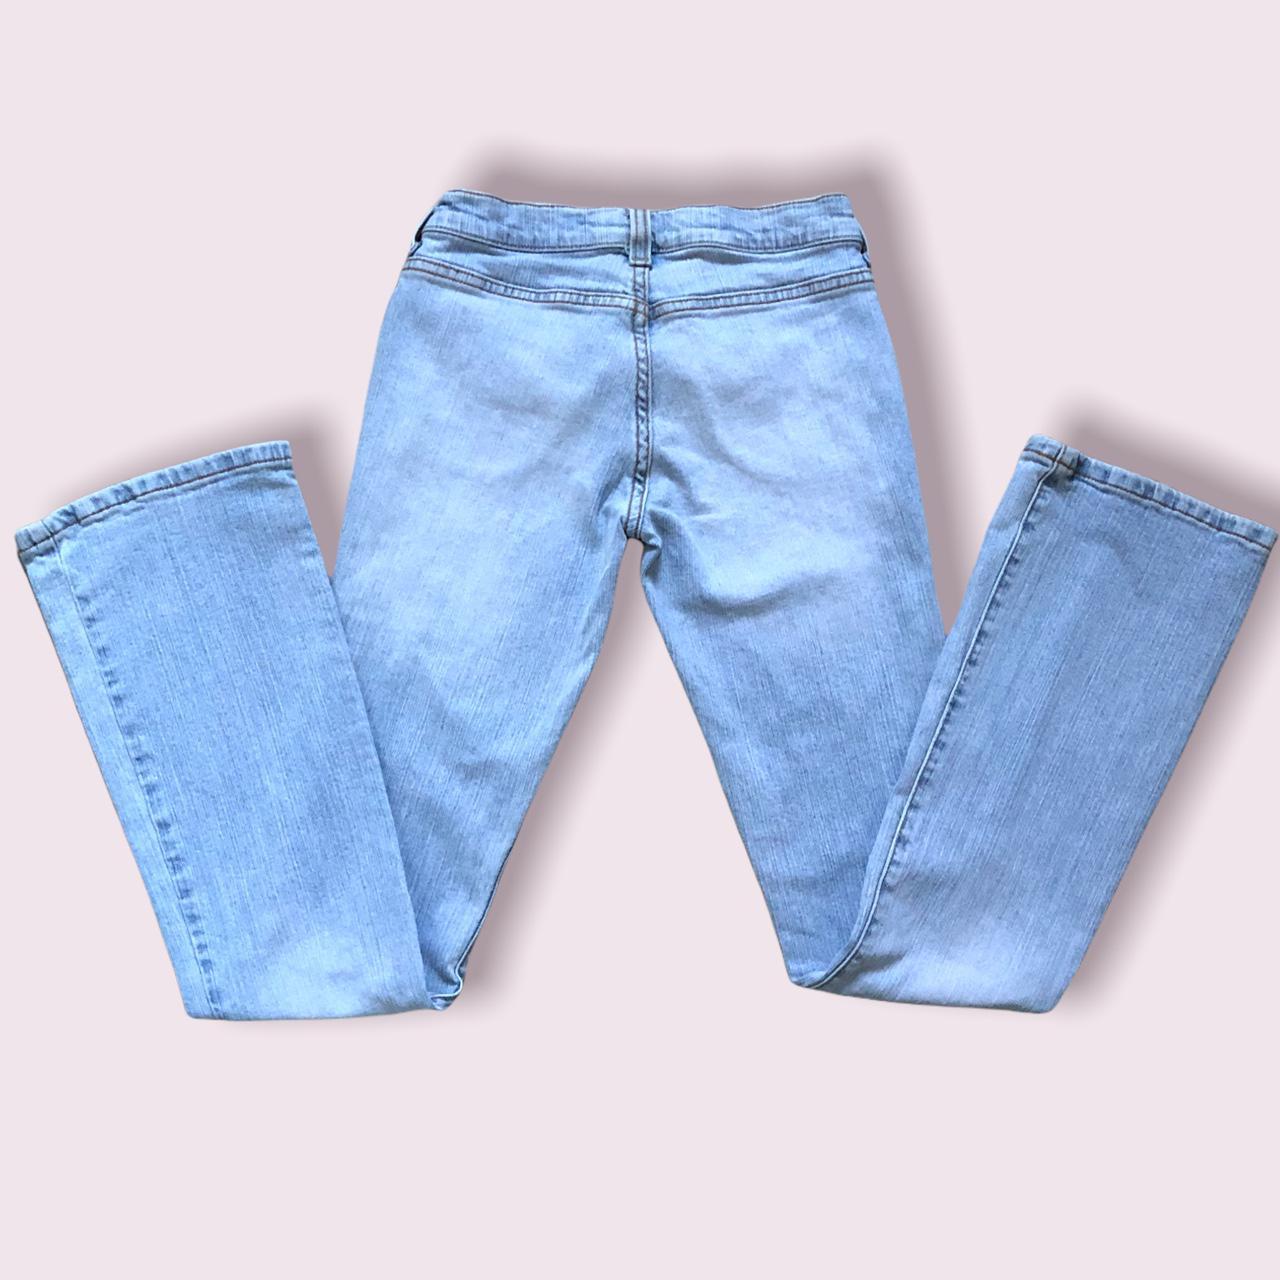 Product Image 2 - Vintage 90s Wide leg jeans,